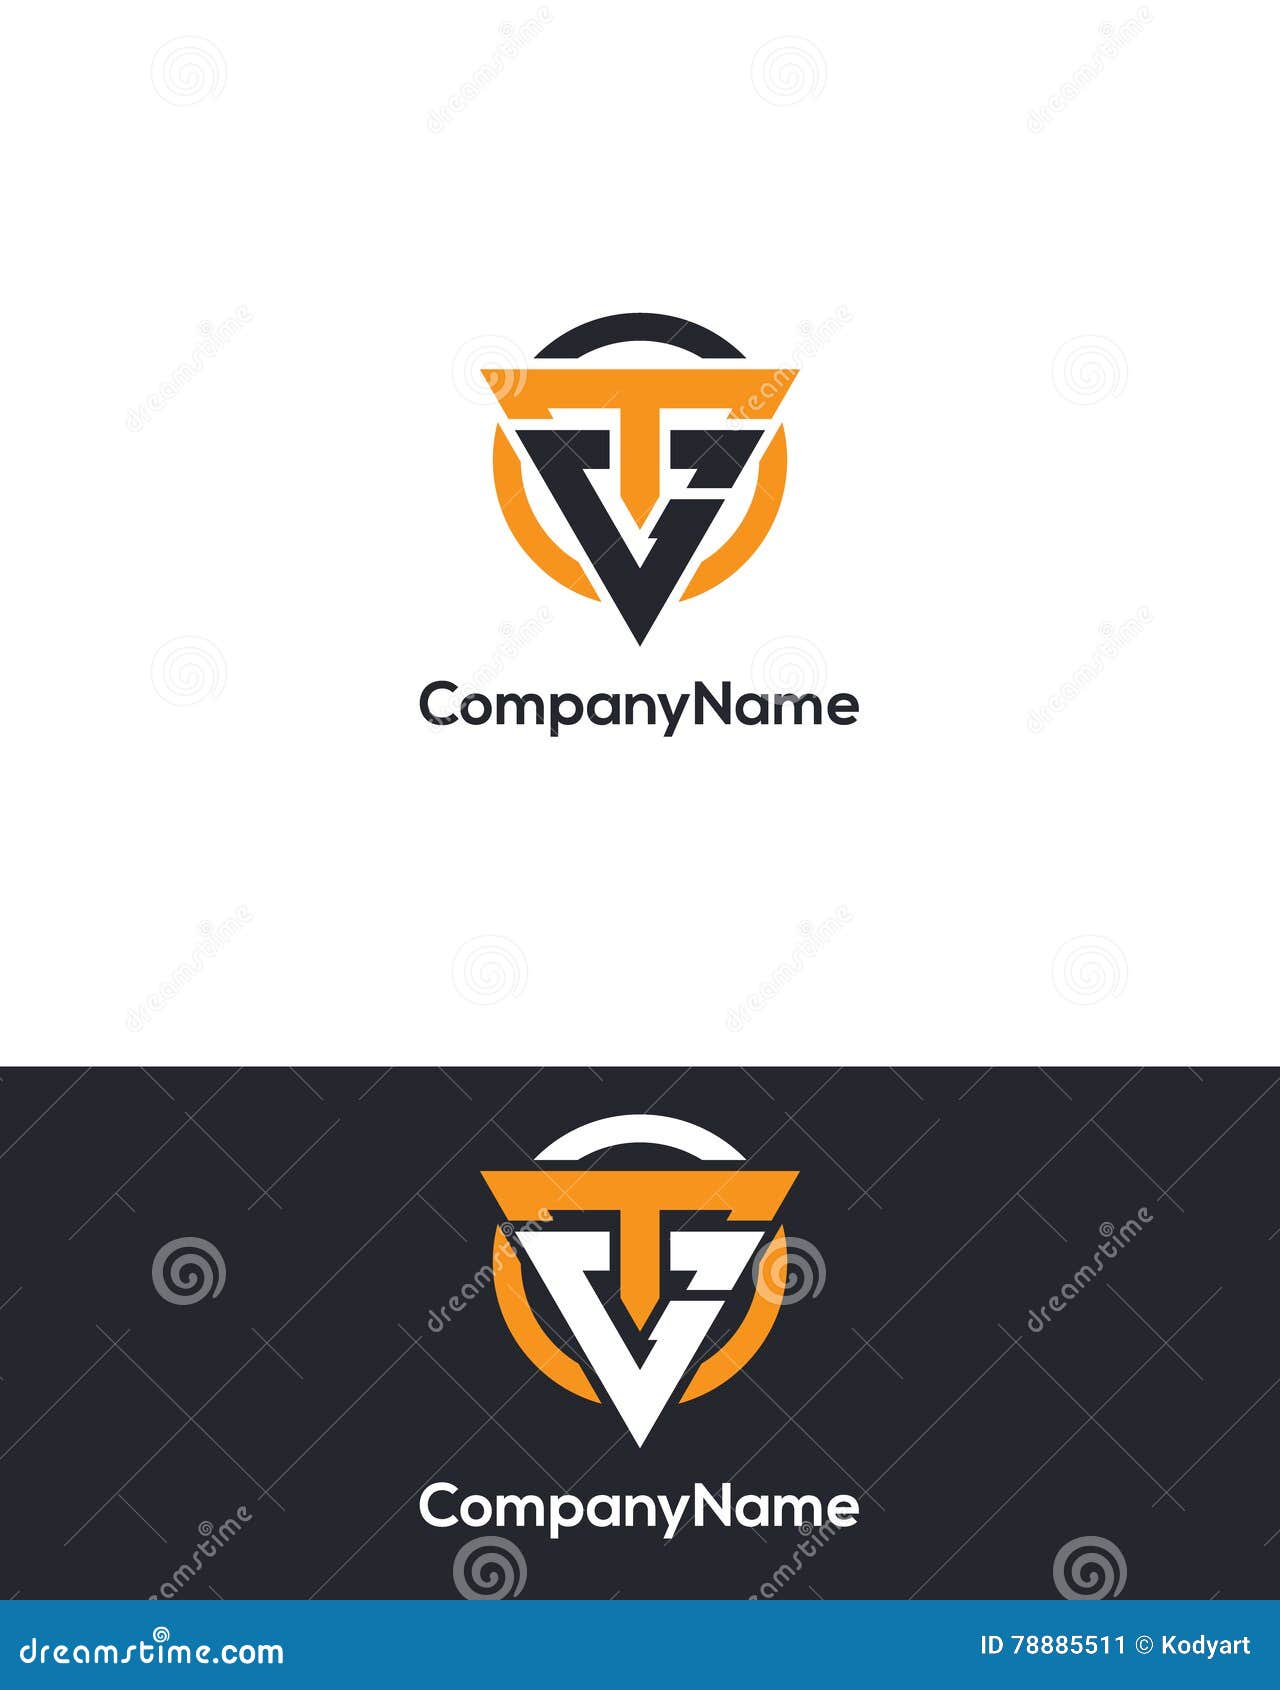 logo image set - stylized letter t and g